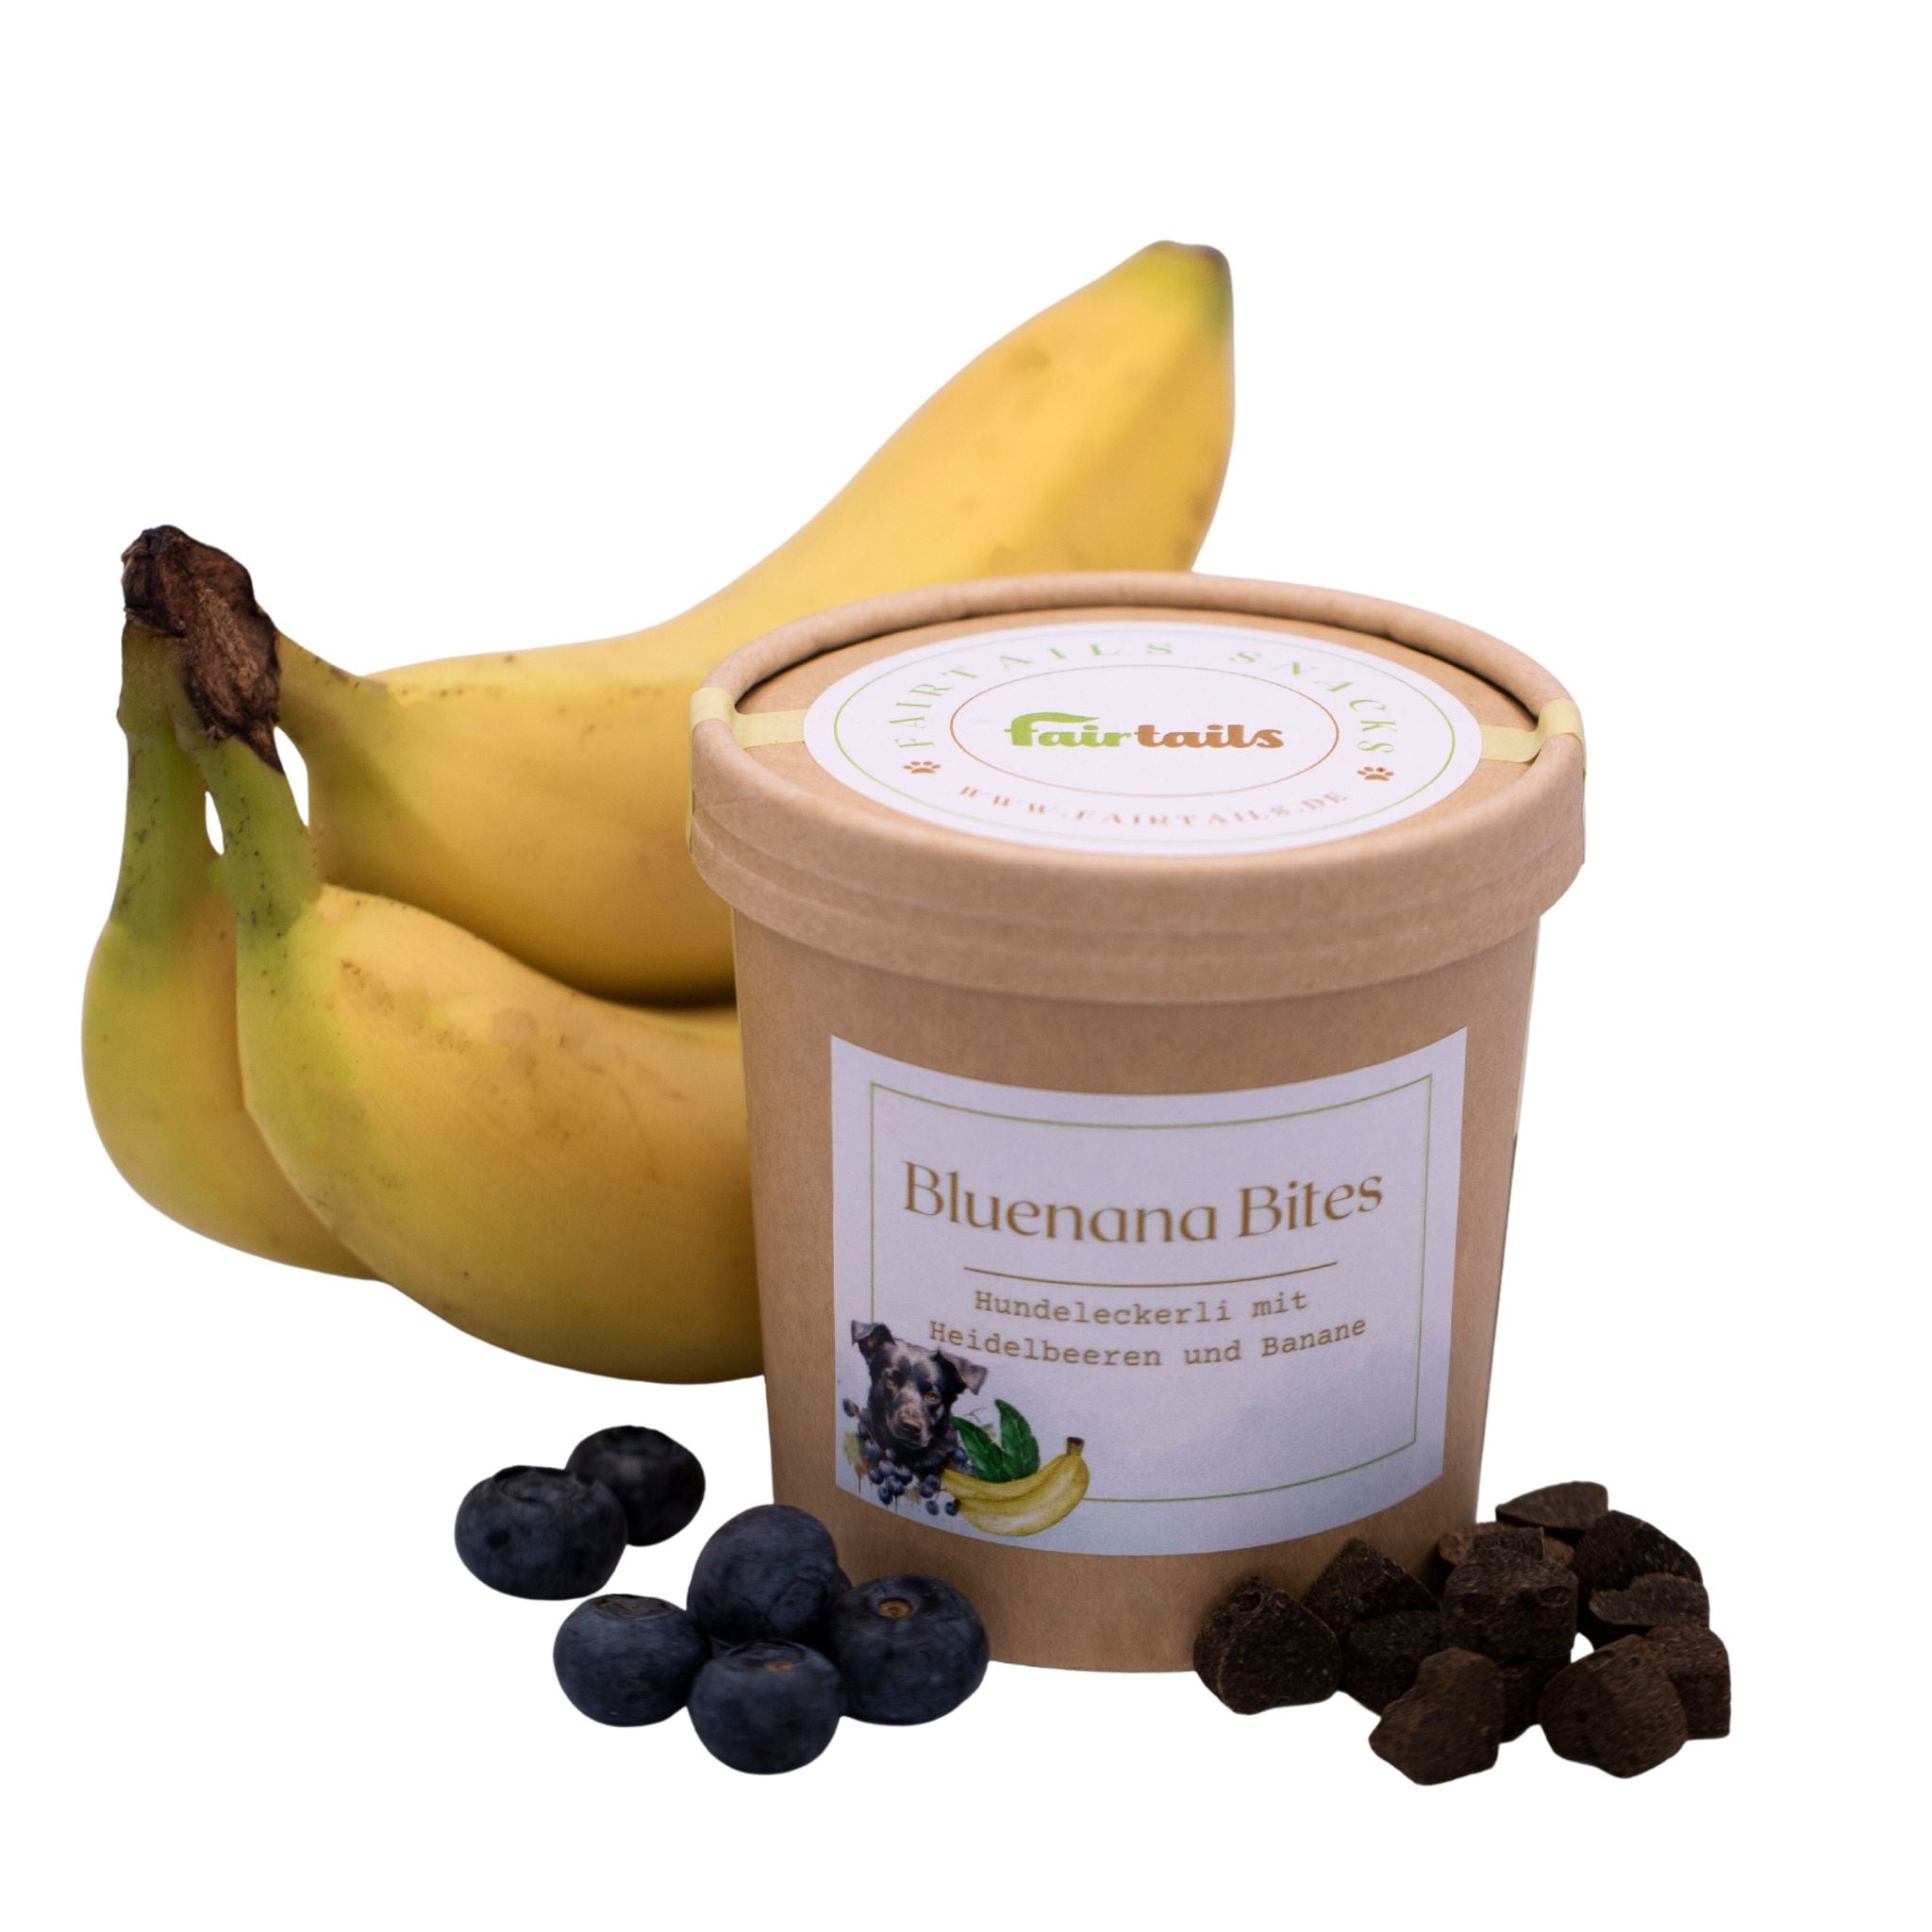 Bluenana Bites - Vegane Hundeleckerli Heidelbeere Banane